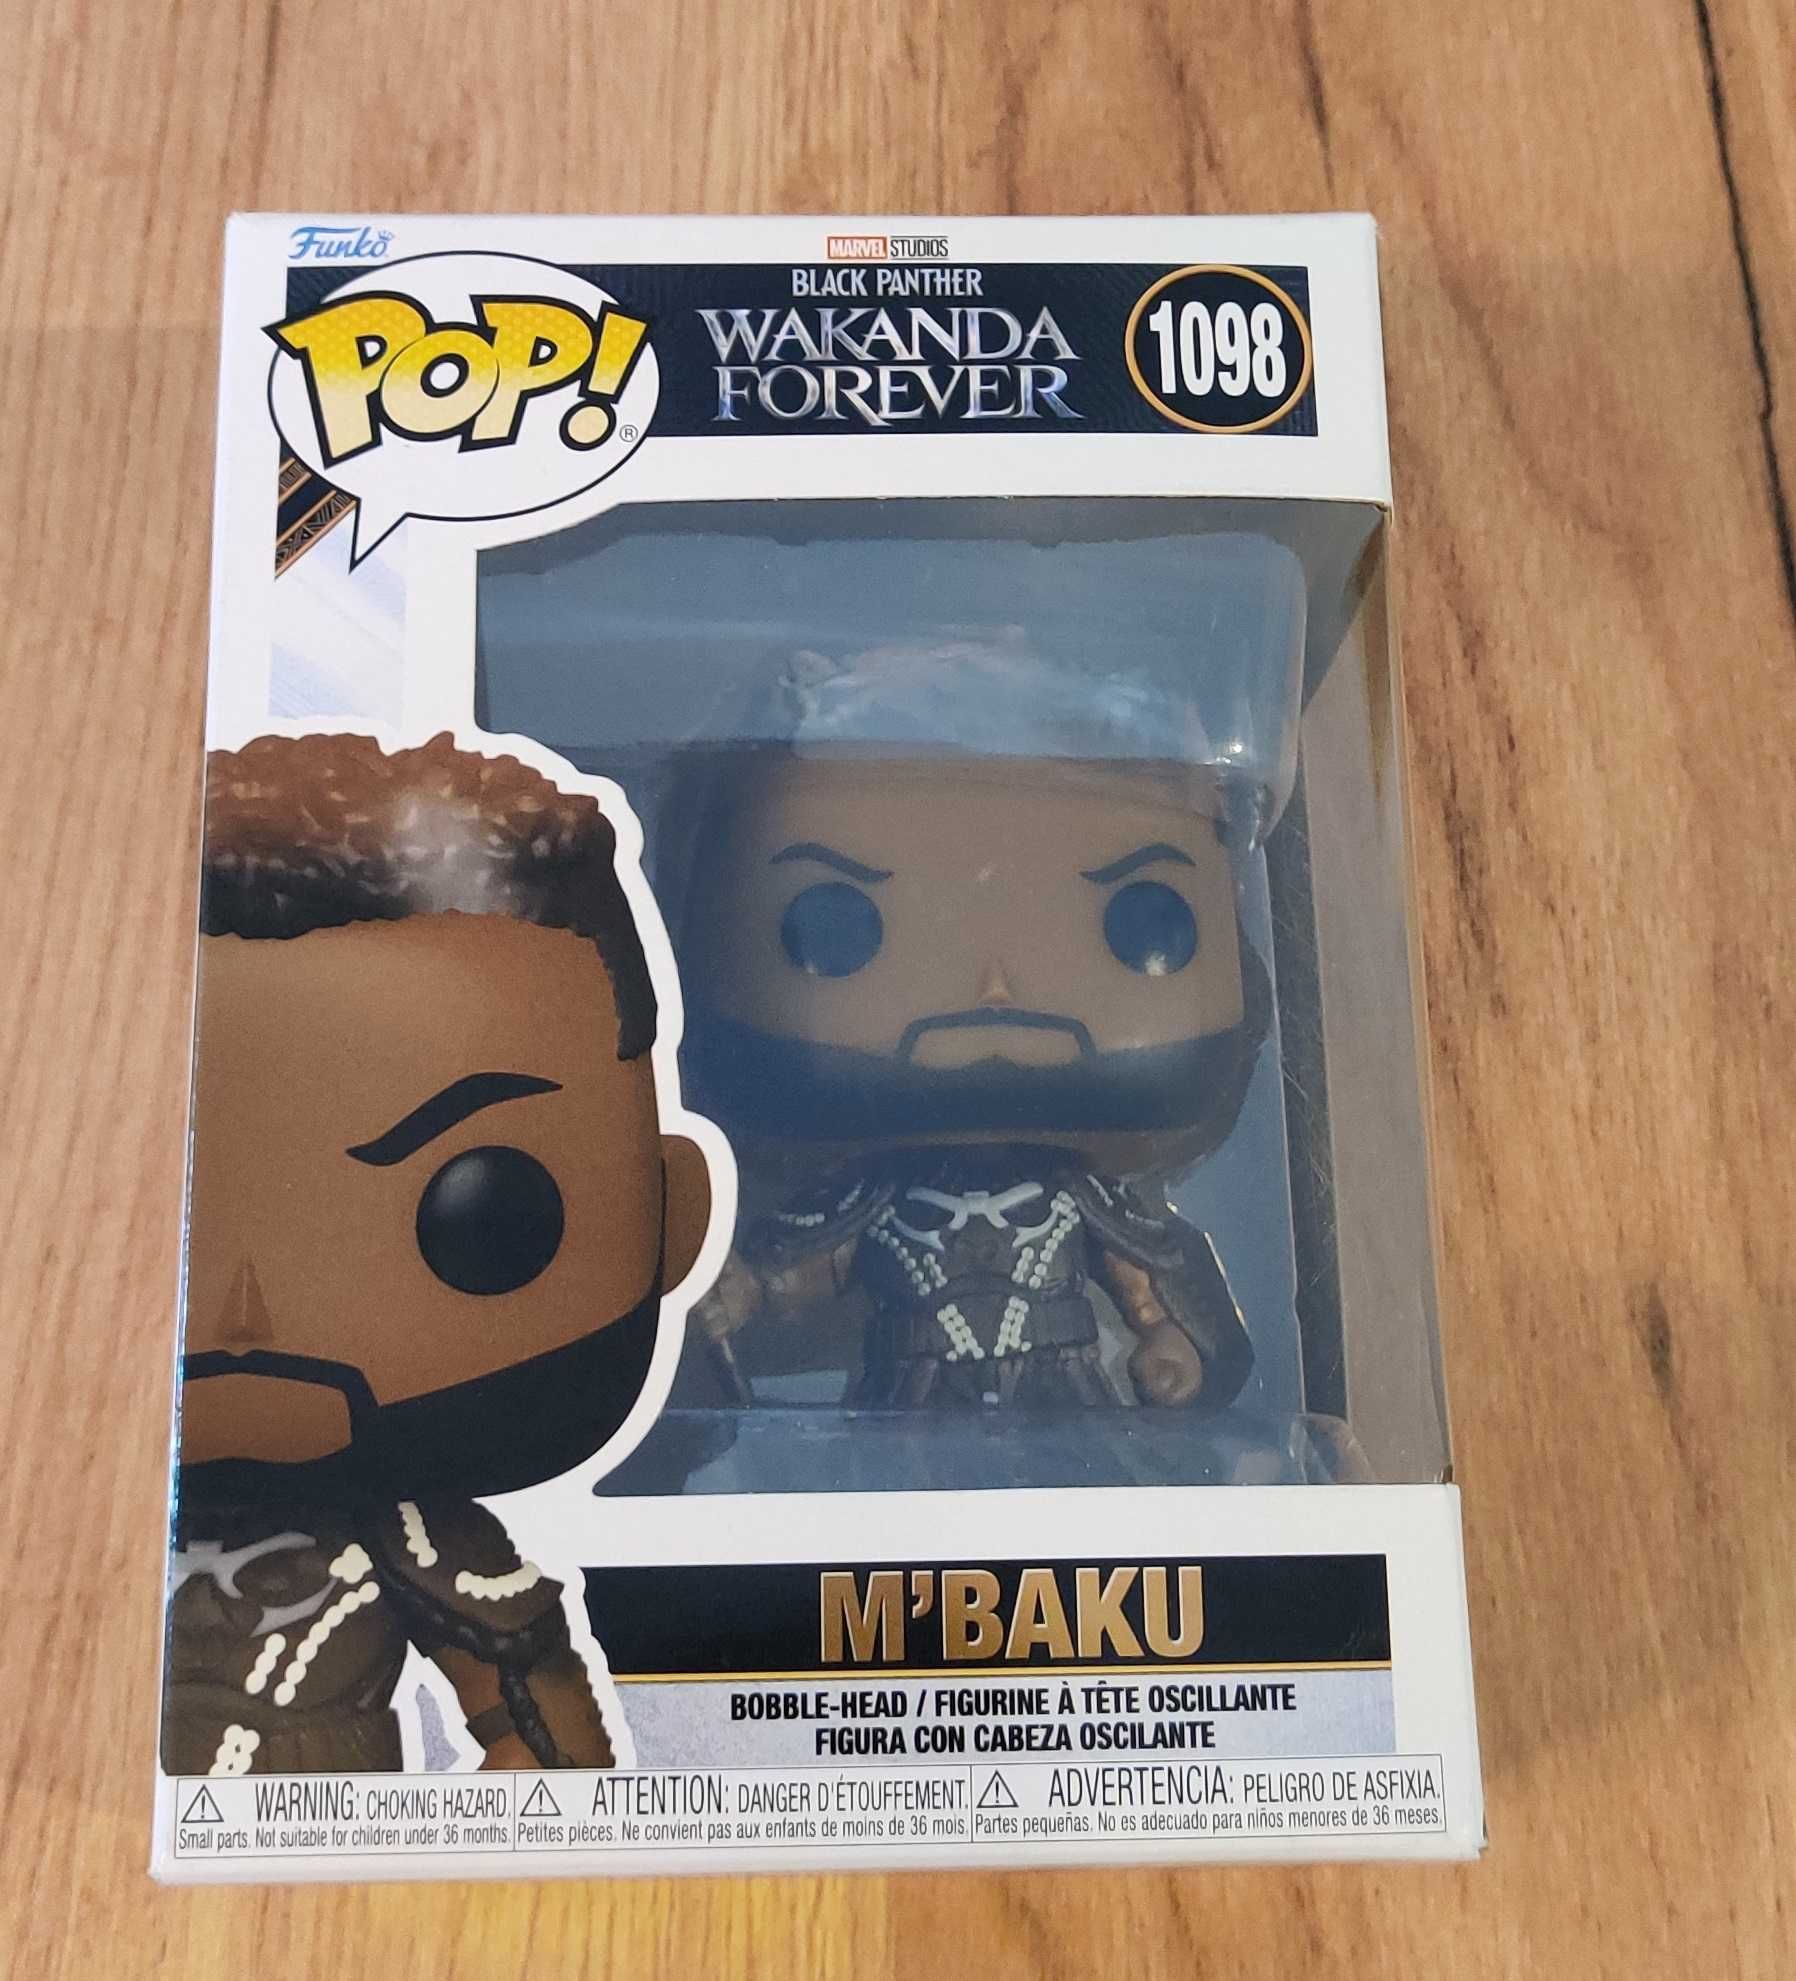 Funko Pop! Black Panther Wakanda Forever M'Baku #1098